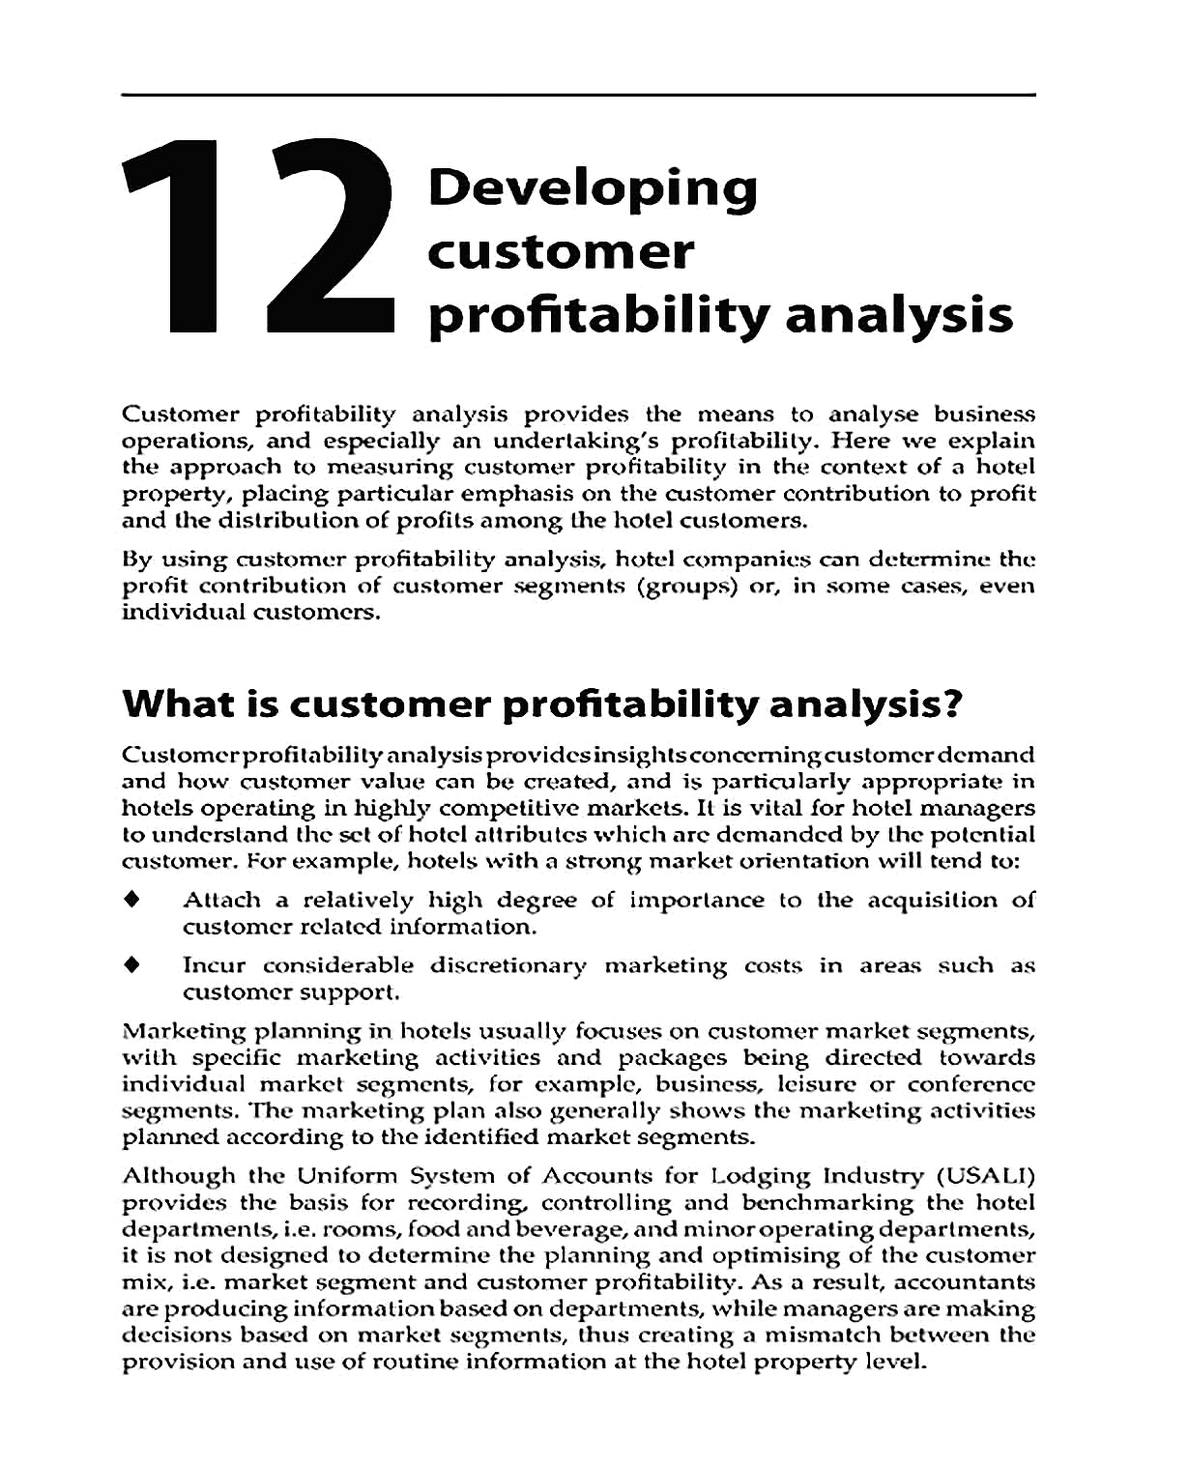 Templates for Customer Profitability Analysis Guide 1 Sample